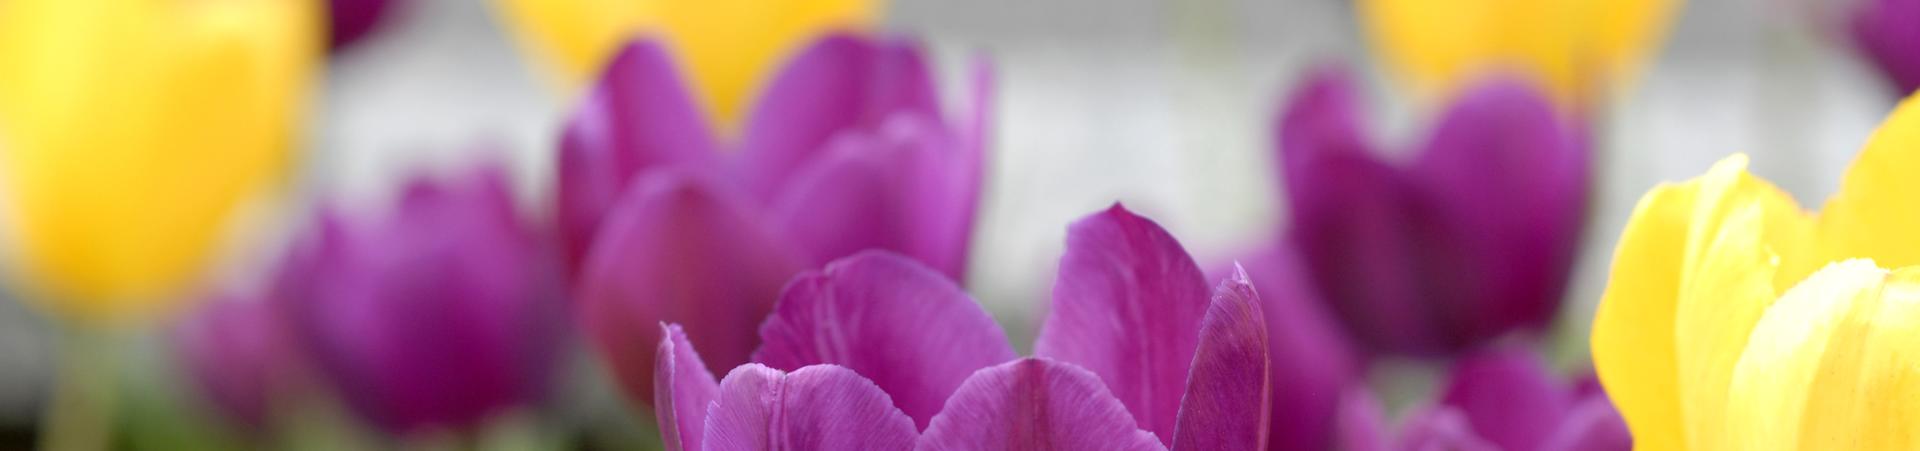 Purple and yellow tulips